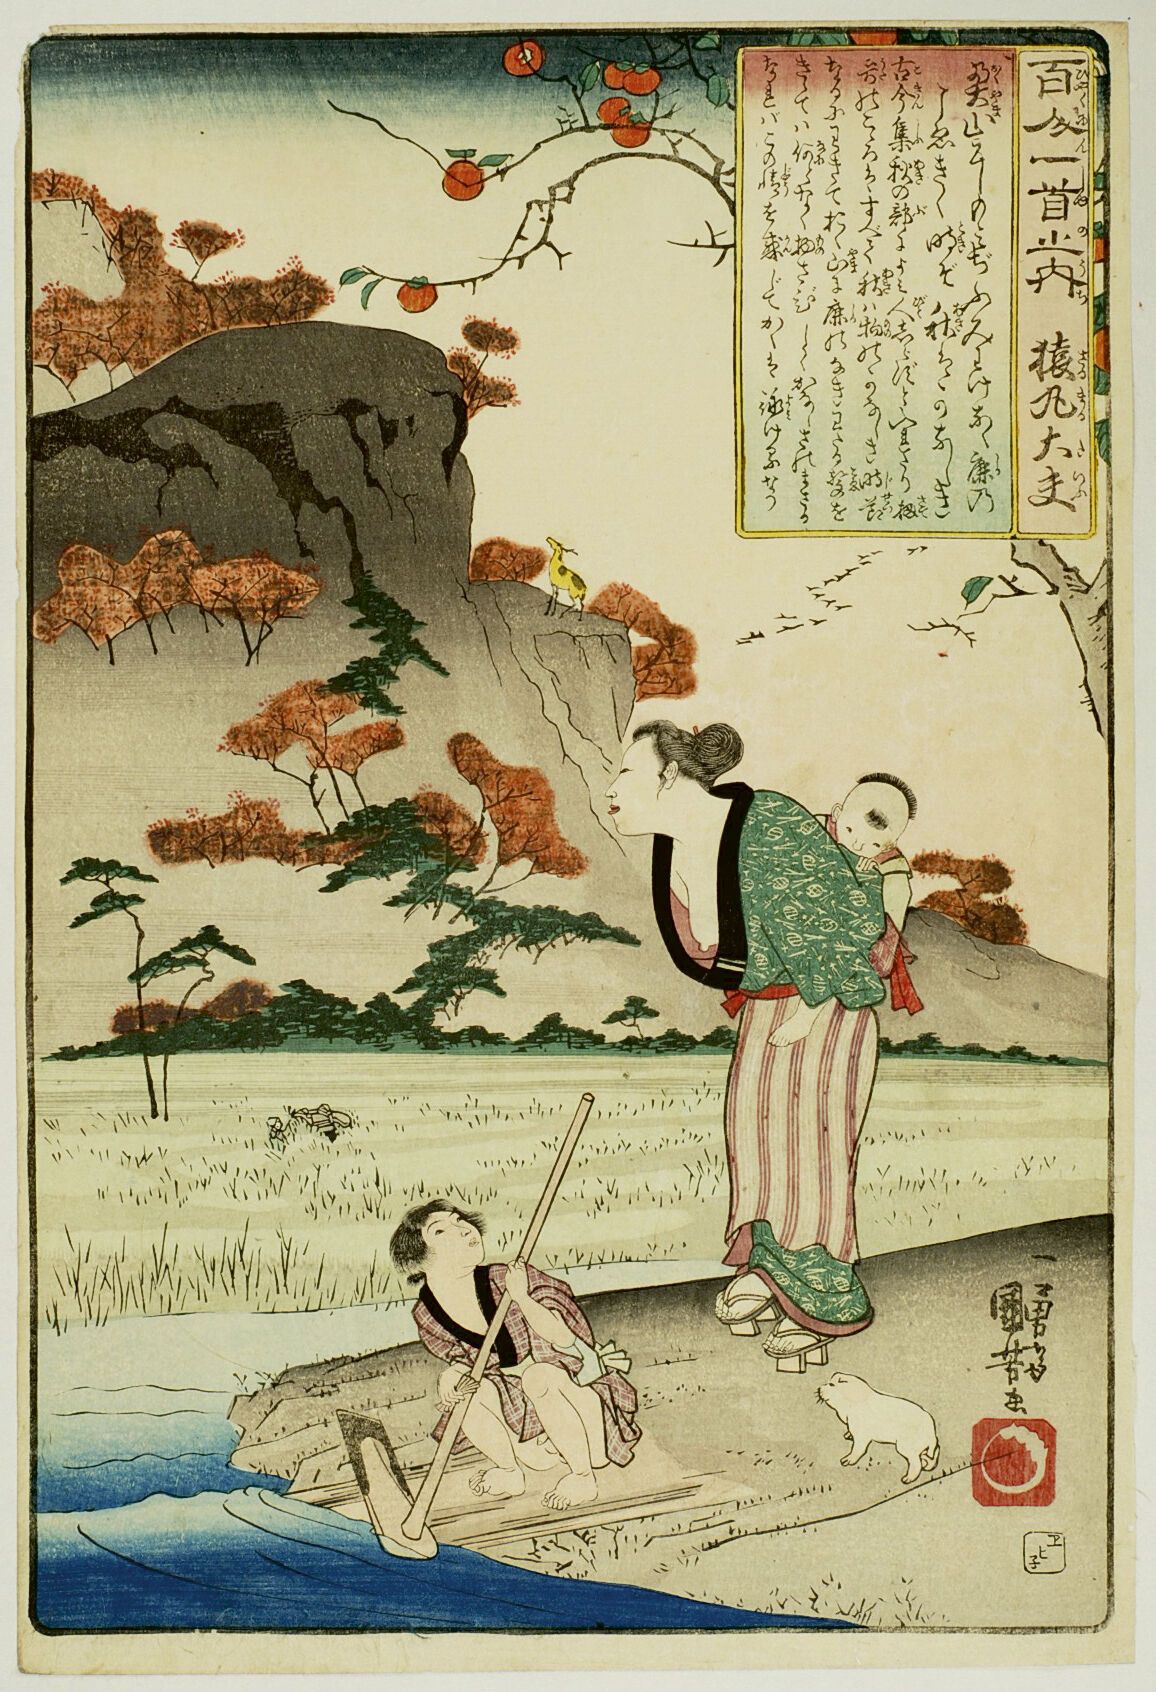 Null 宇都宫邦彦 (1797-1861)
百人一首》系列中的 "大板"（Oban tate-e），板块为 "Sarumaru Dayu"，农妇和她的两个孩子&hellip;